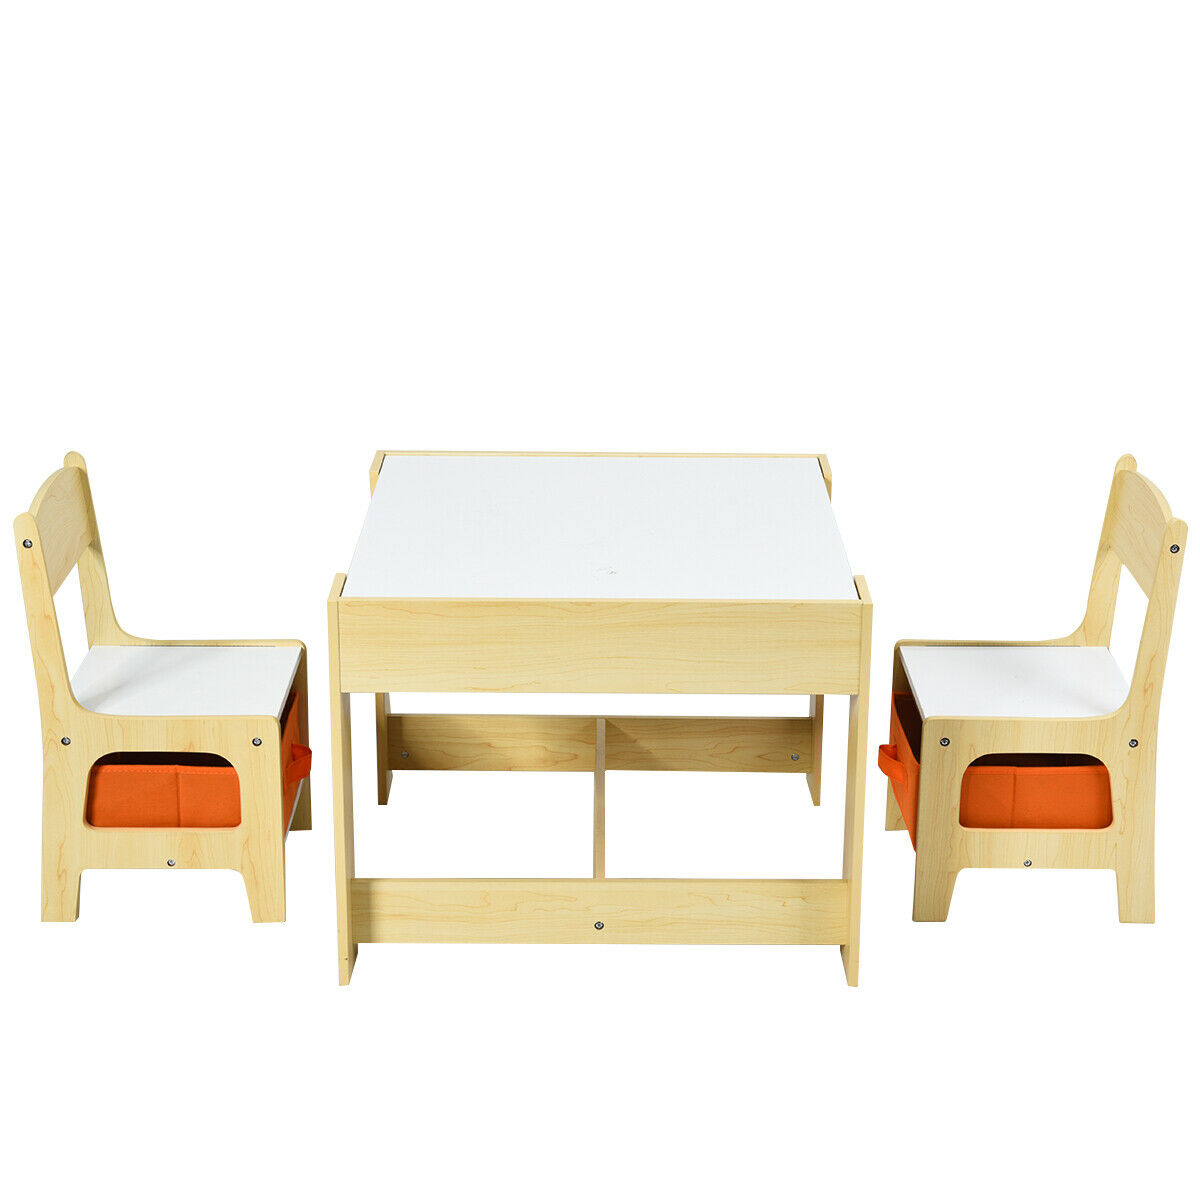 Set Of Table Chair New Crayola Kids Furniture Tub Shelving Kids Sotrage Bench Home Garden Home Decor Organization